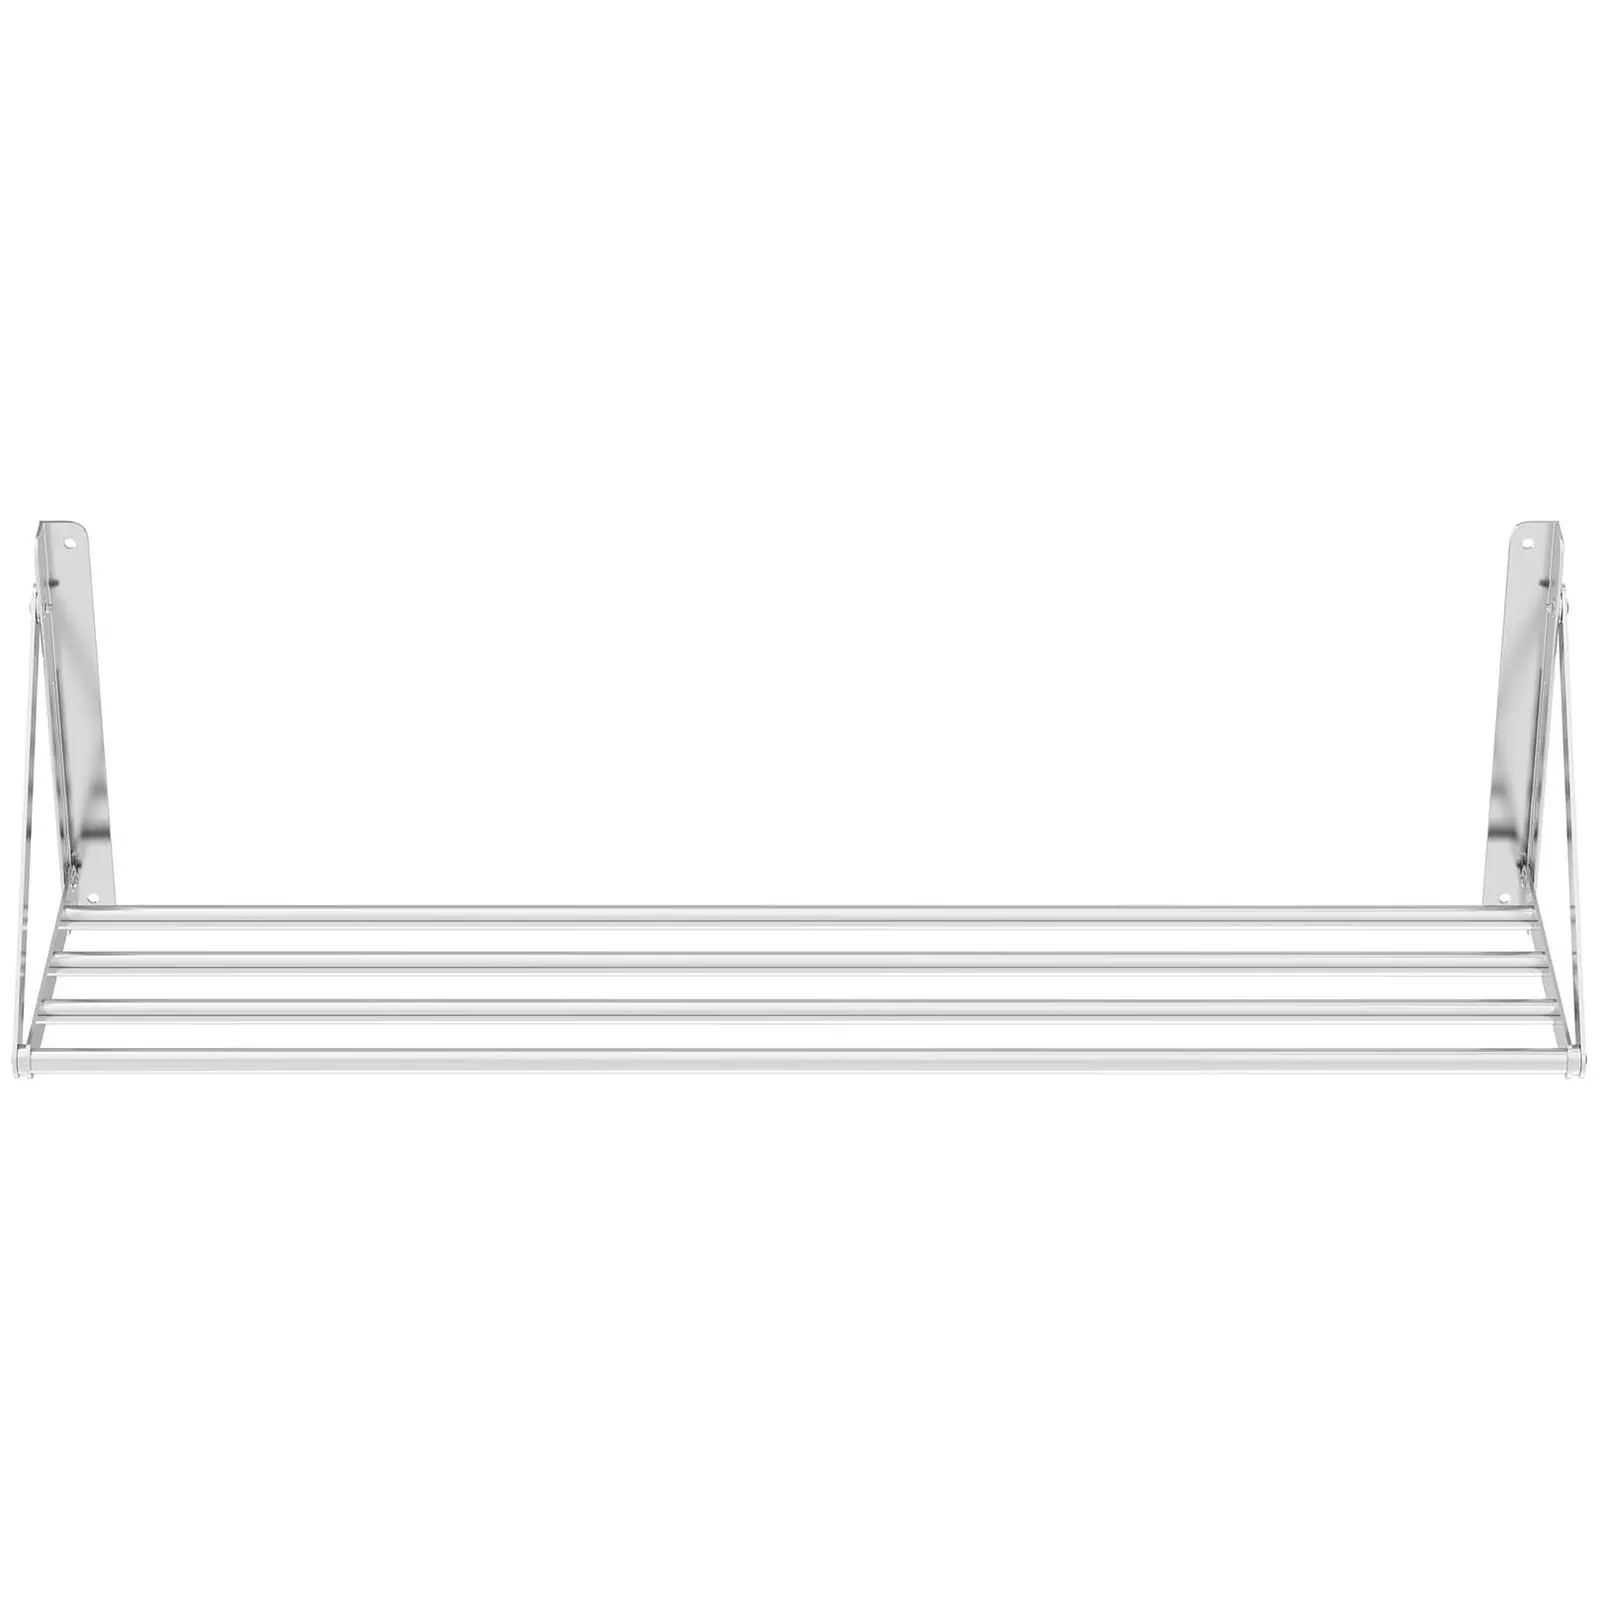 Wall Shelf - folding - tube style - 120 x 30 cm - 40 kg - stainless steel